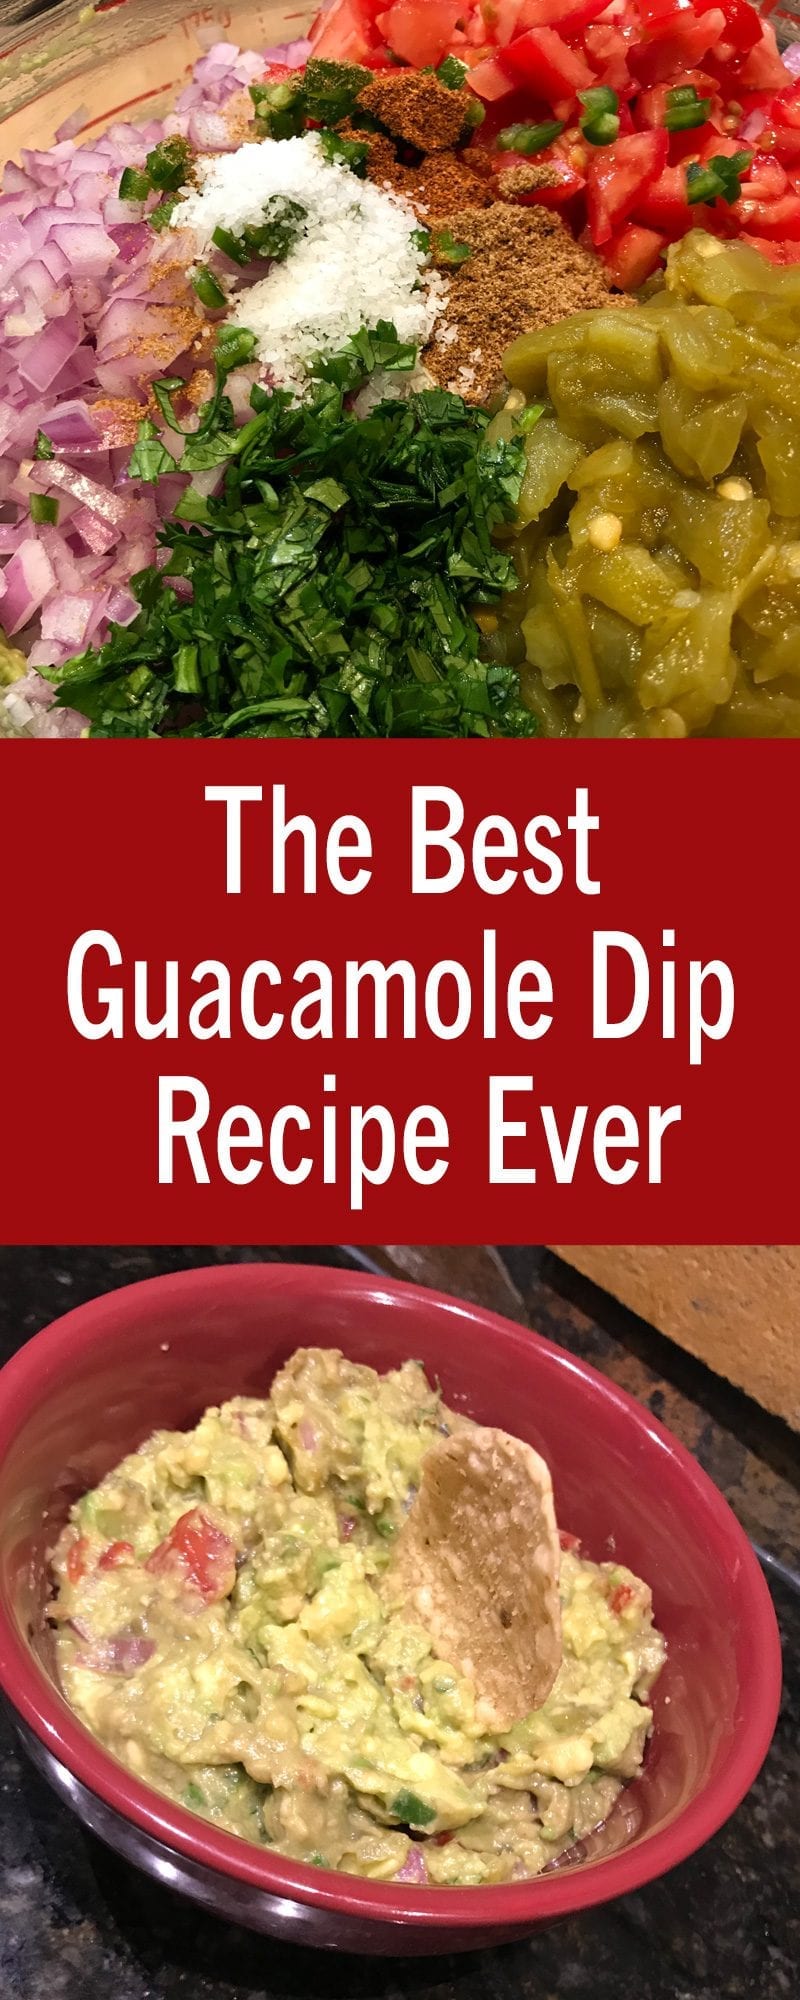 The Best Guacamole Dip Recipe Ever